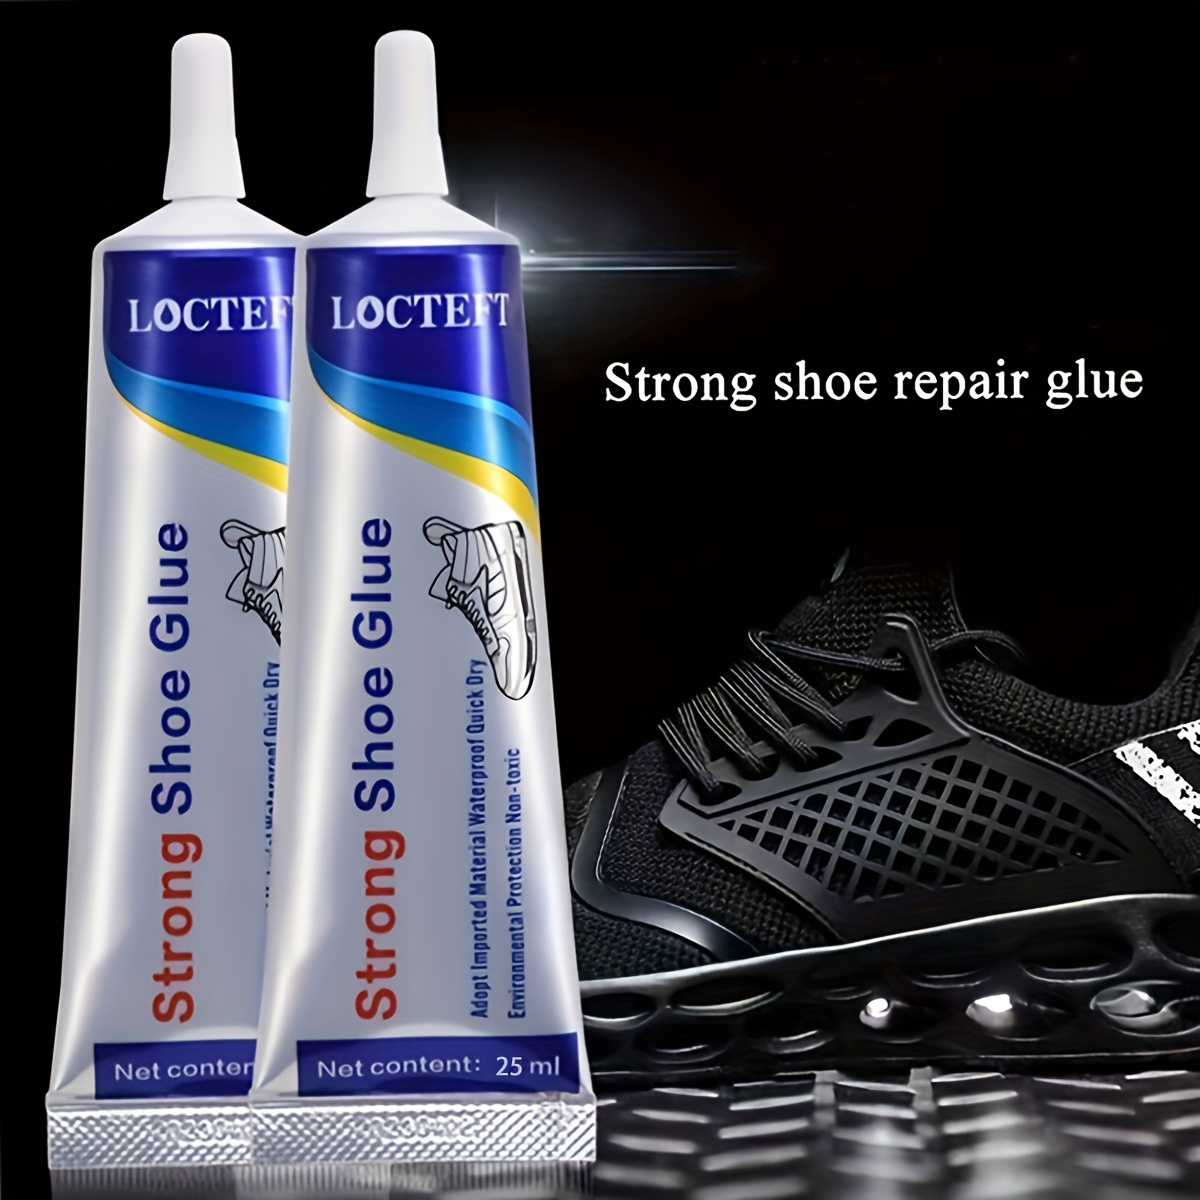 Shoe glue, special shoe glue, shoe glue, strong shoe repair glue